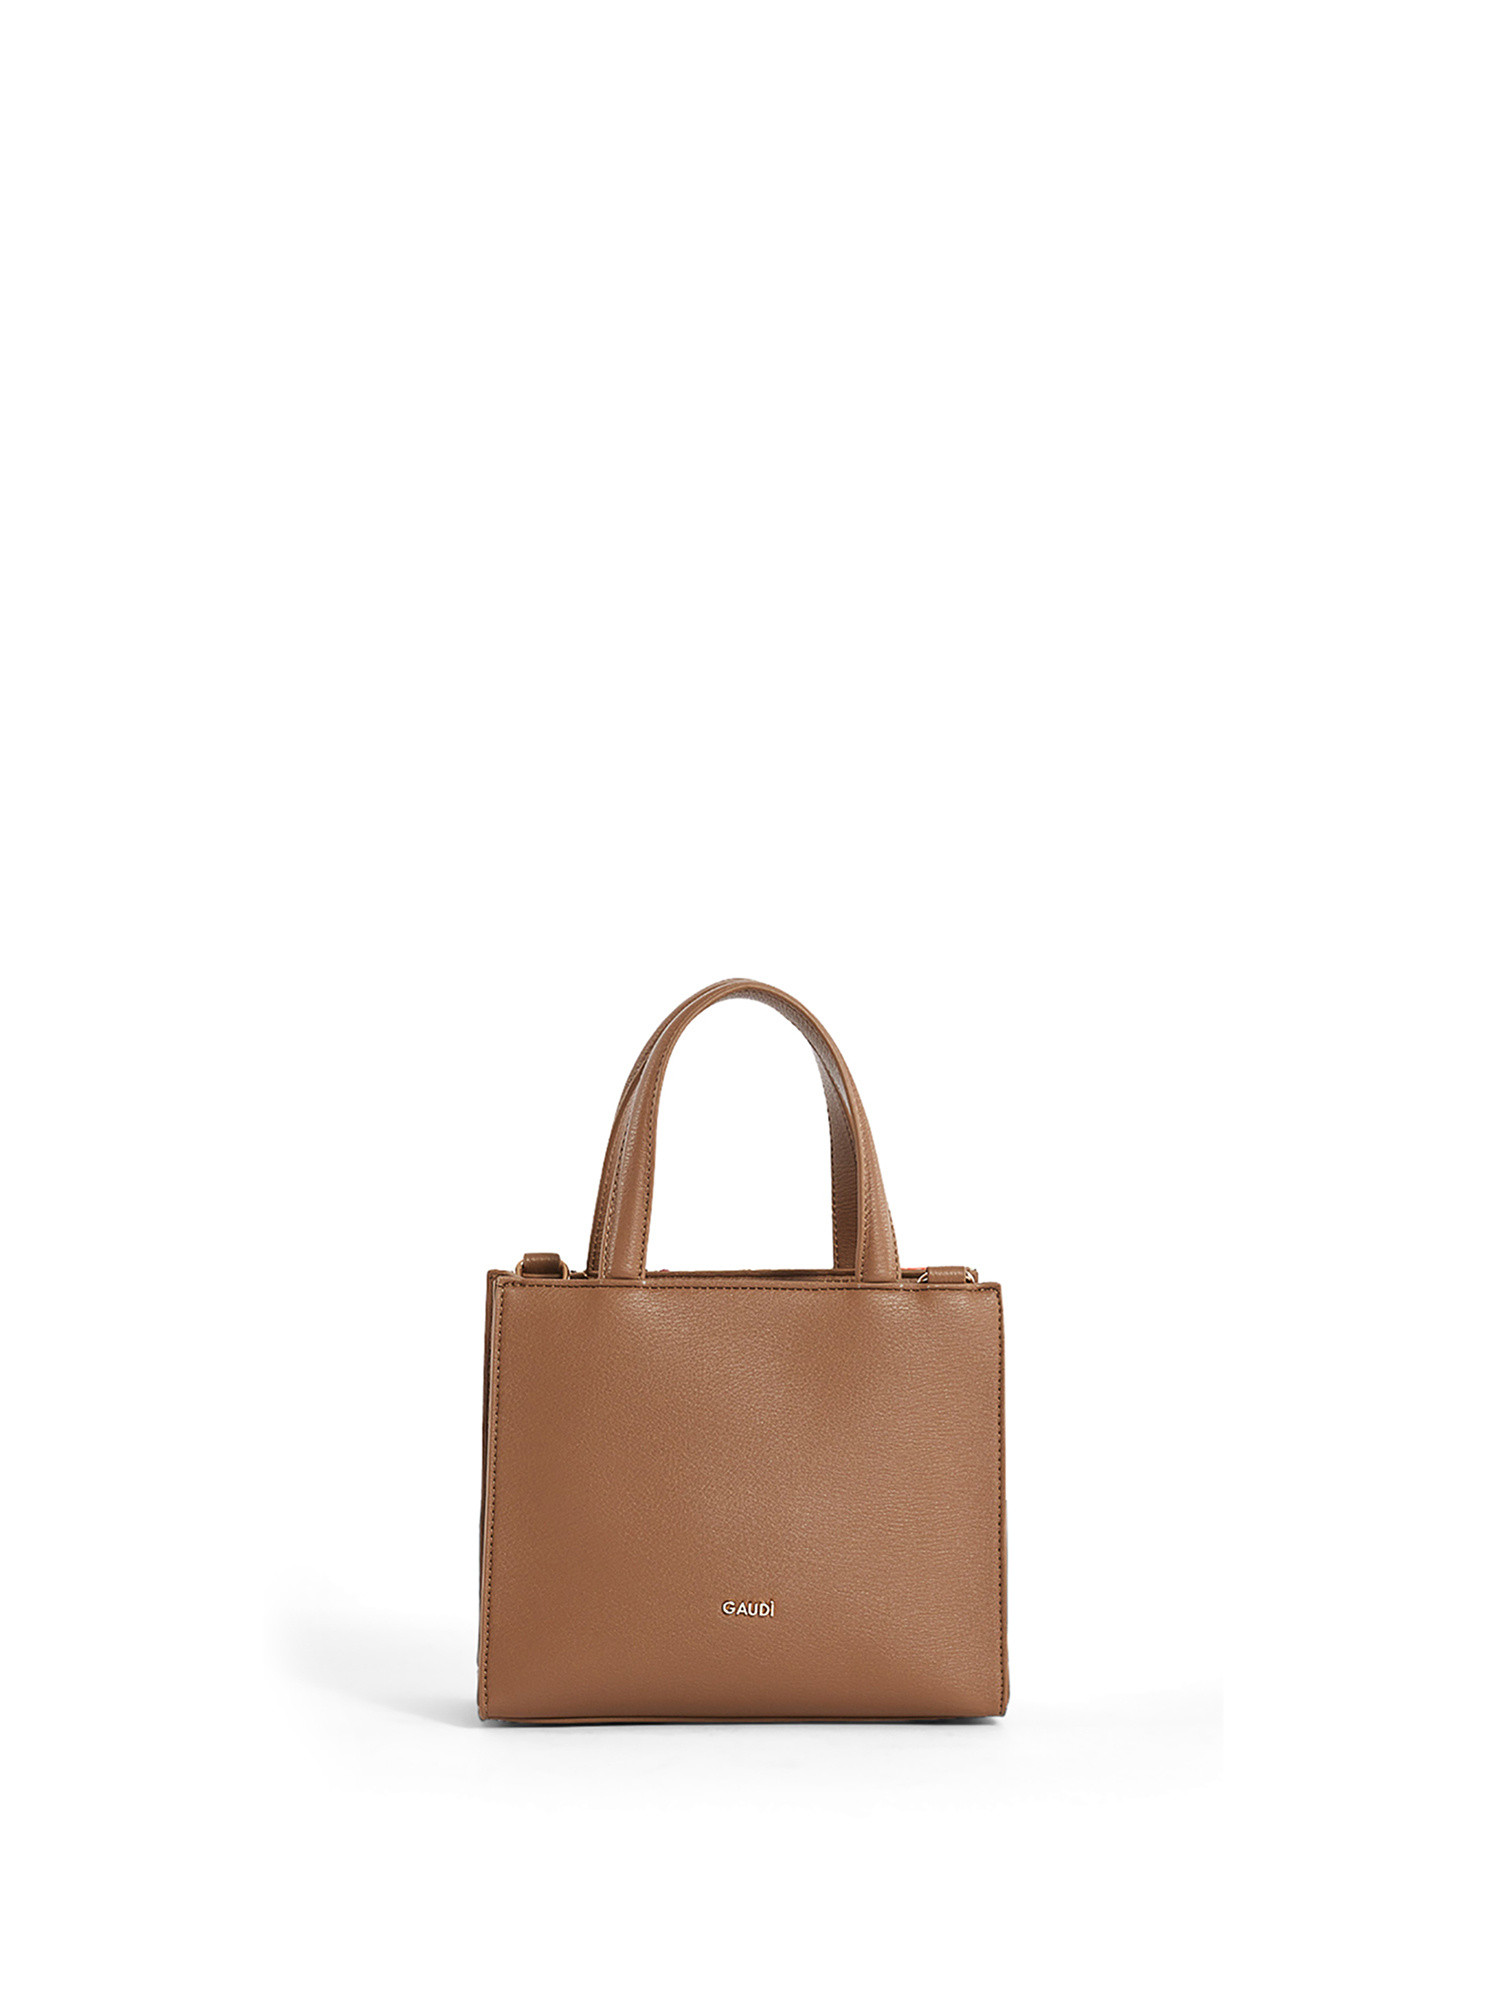 Gaudì - Mini shopping bag in rafia e similpelle, Cammello, large image number 0